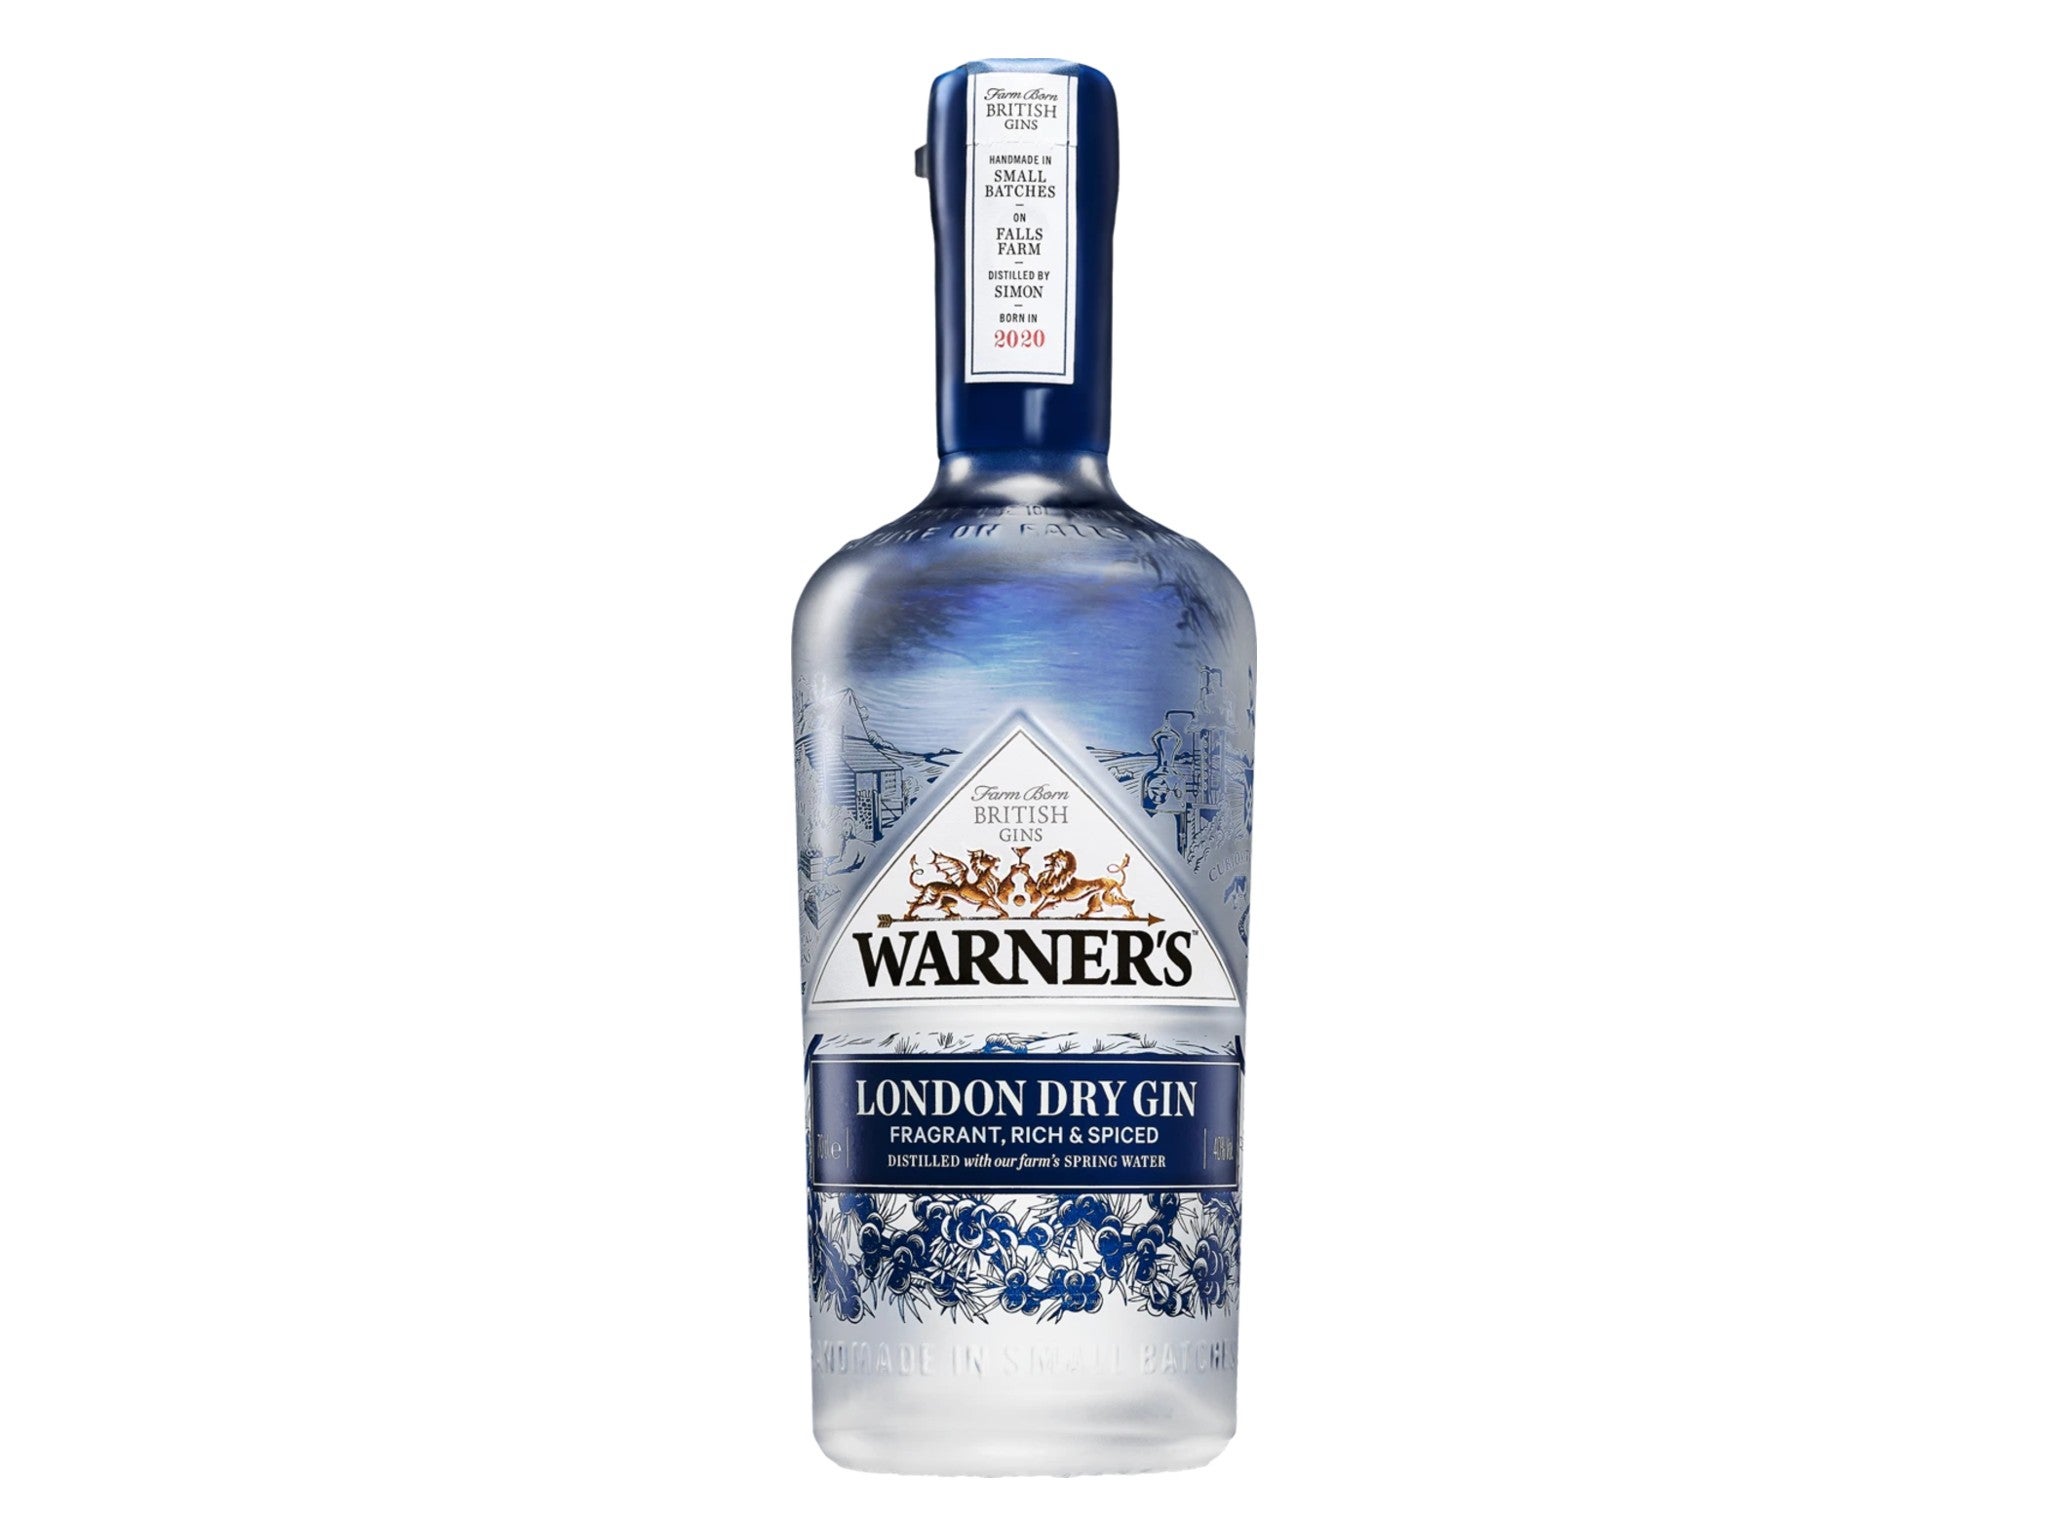 Warner’s London dry gin indybest.jpeg